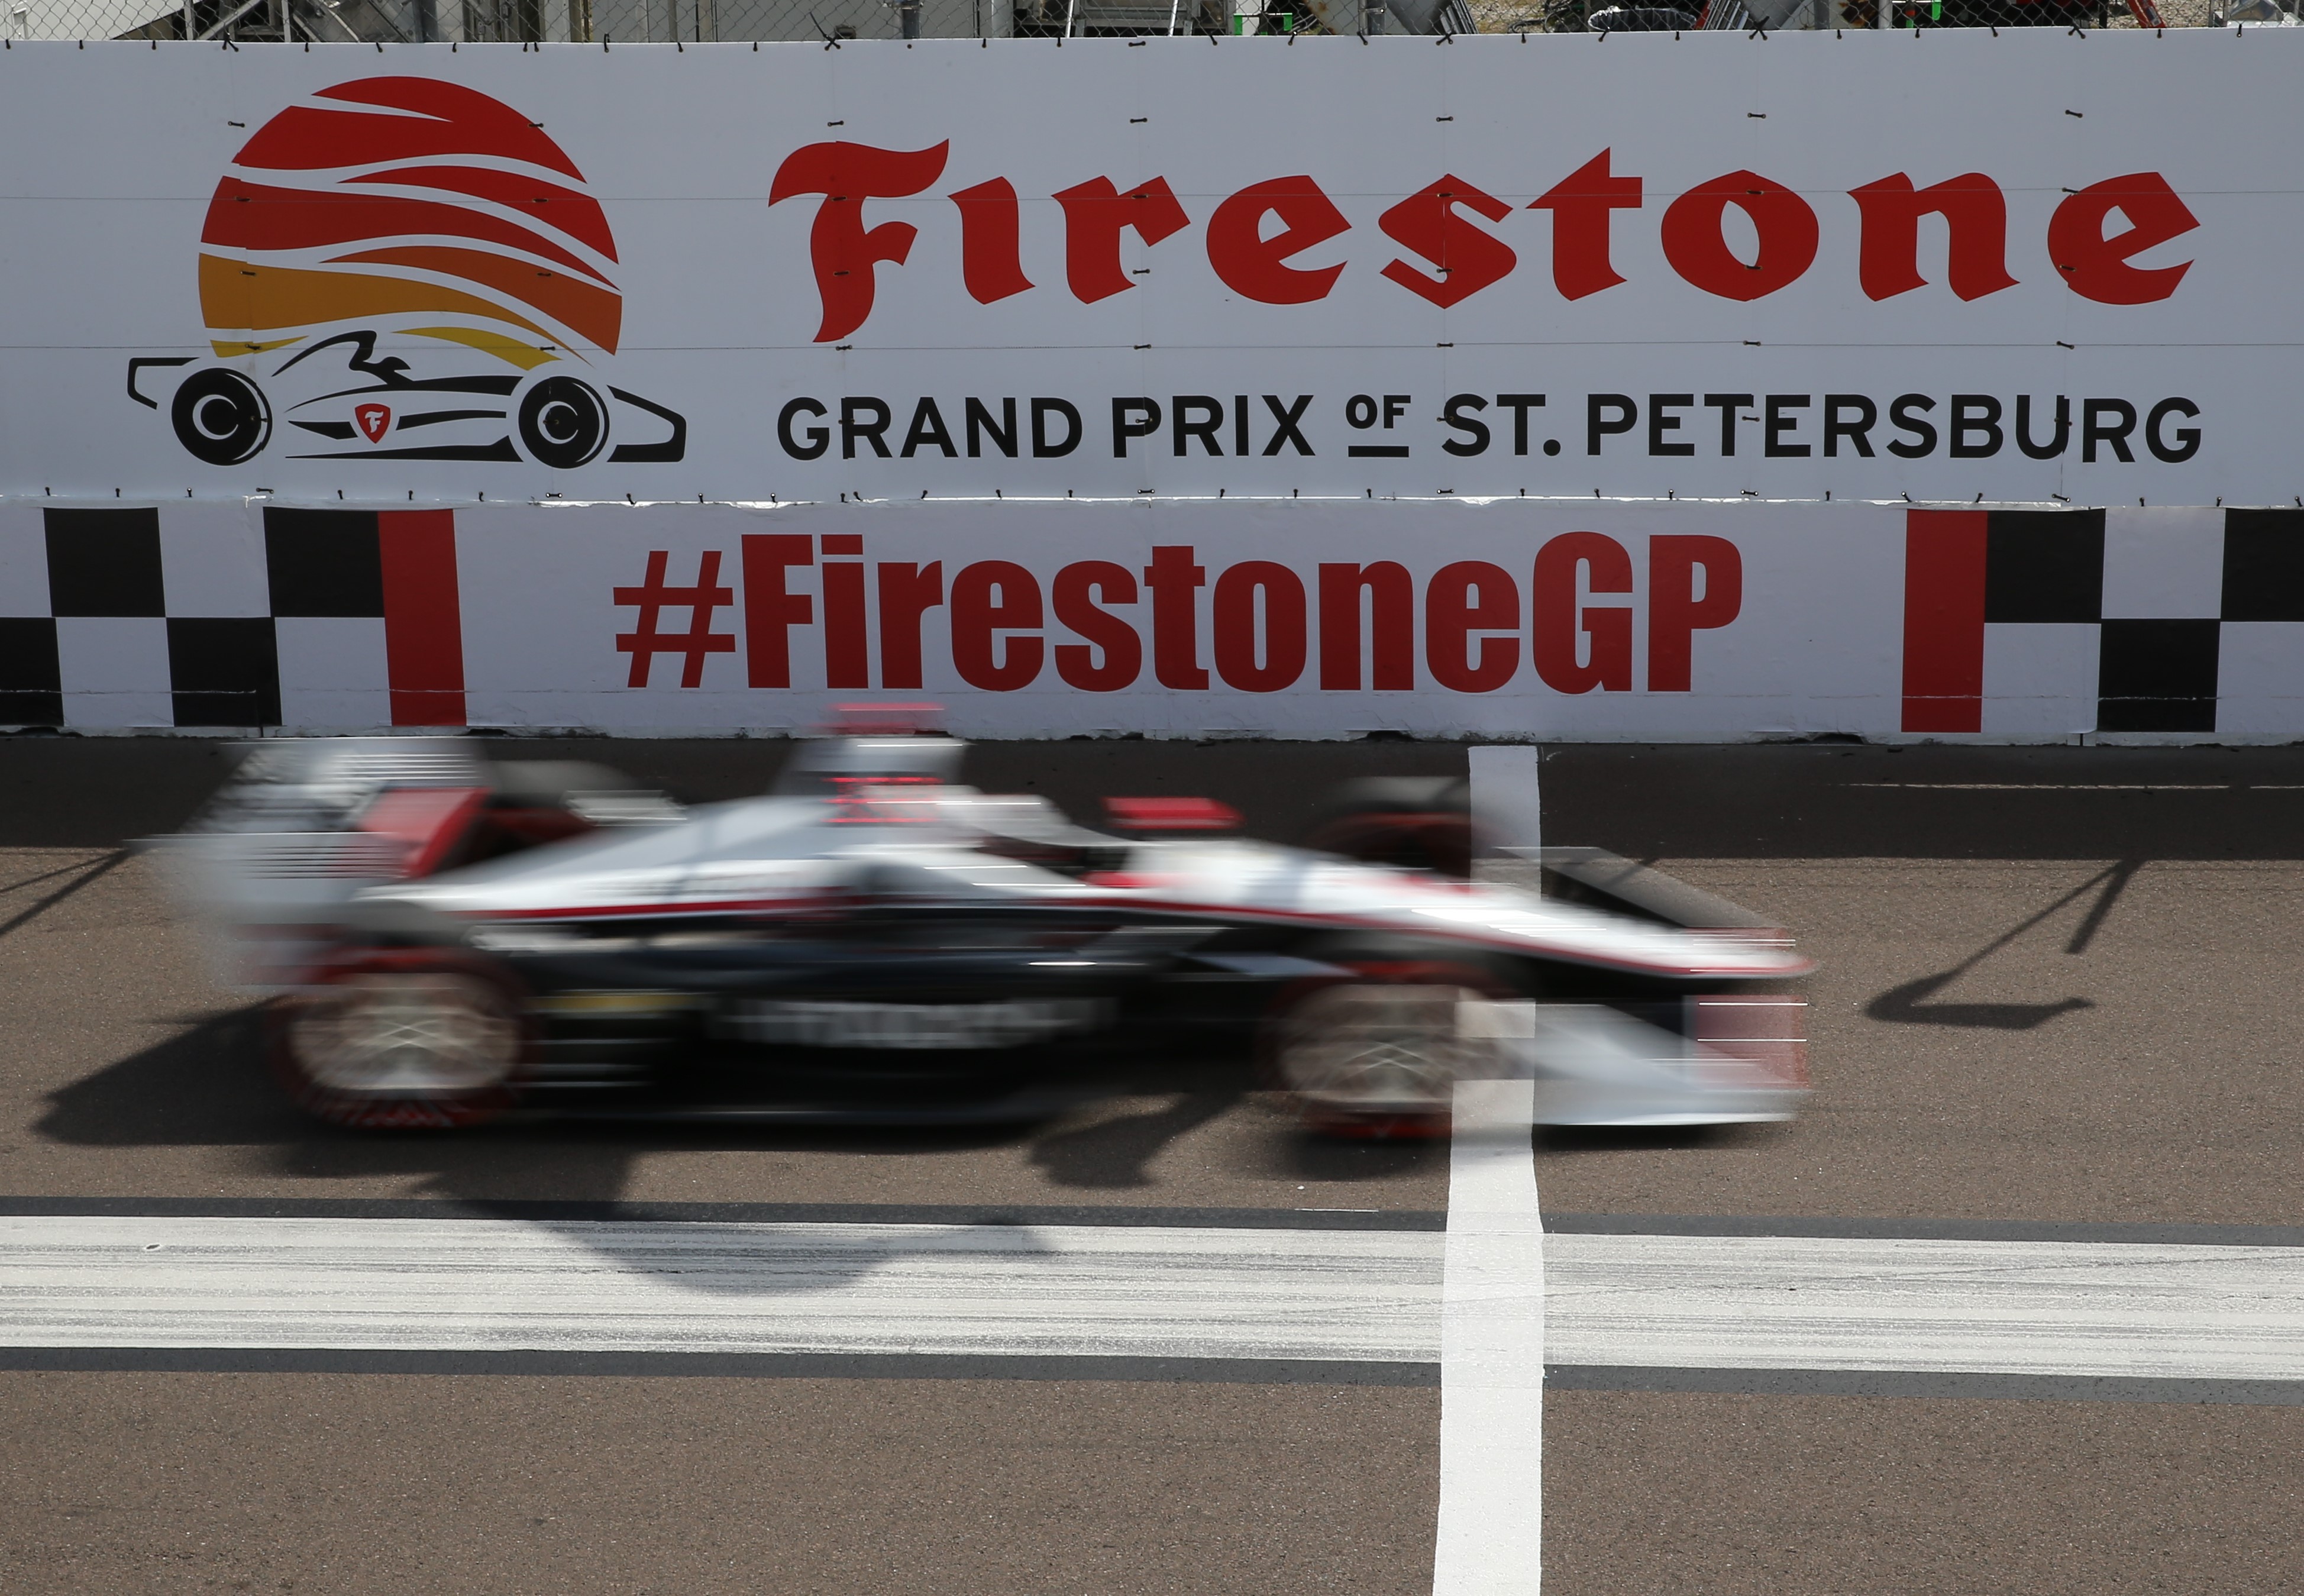 Firestone Grand Prix of St. Petersburg - Schedule